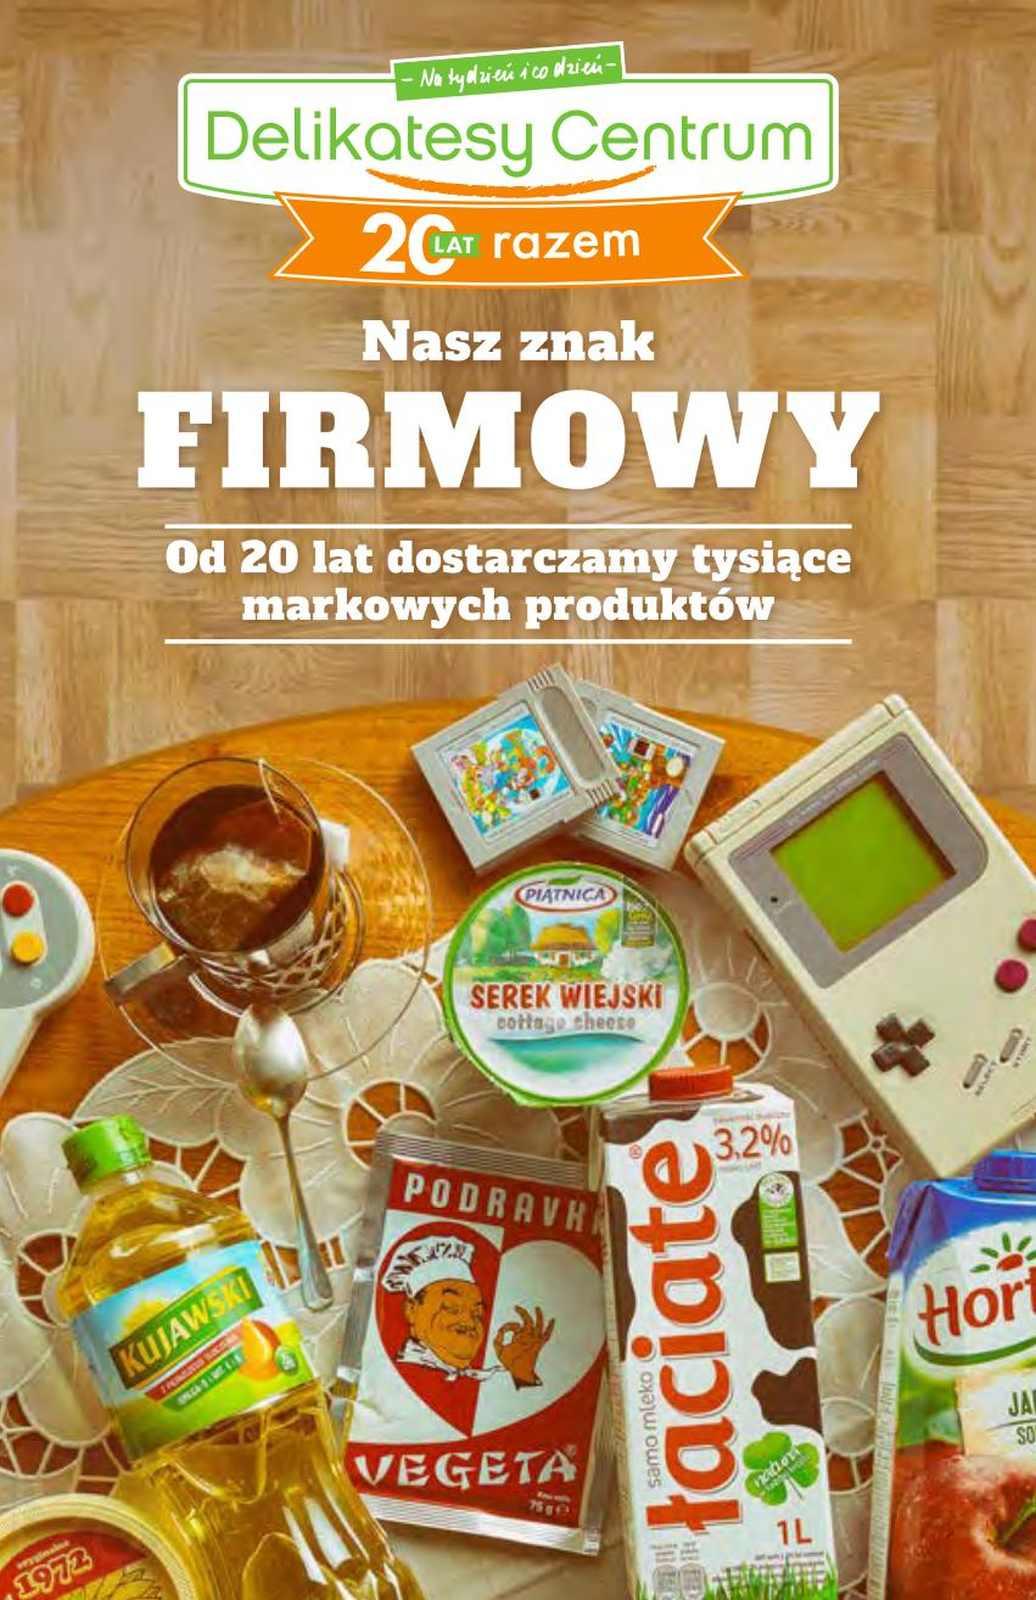 Gazetka promocyjna Delikatesy Centrum do 24/07/2019 str.1